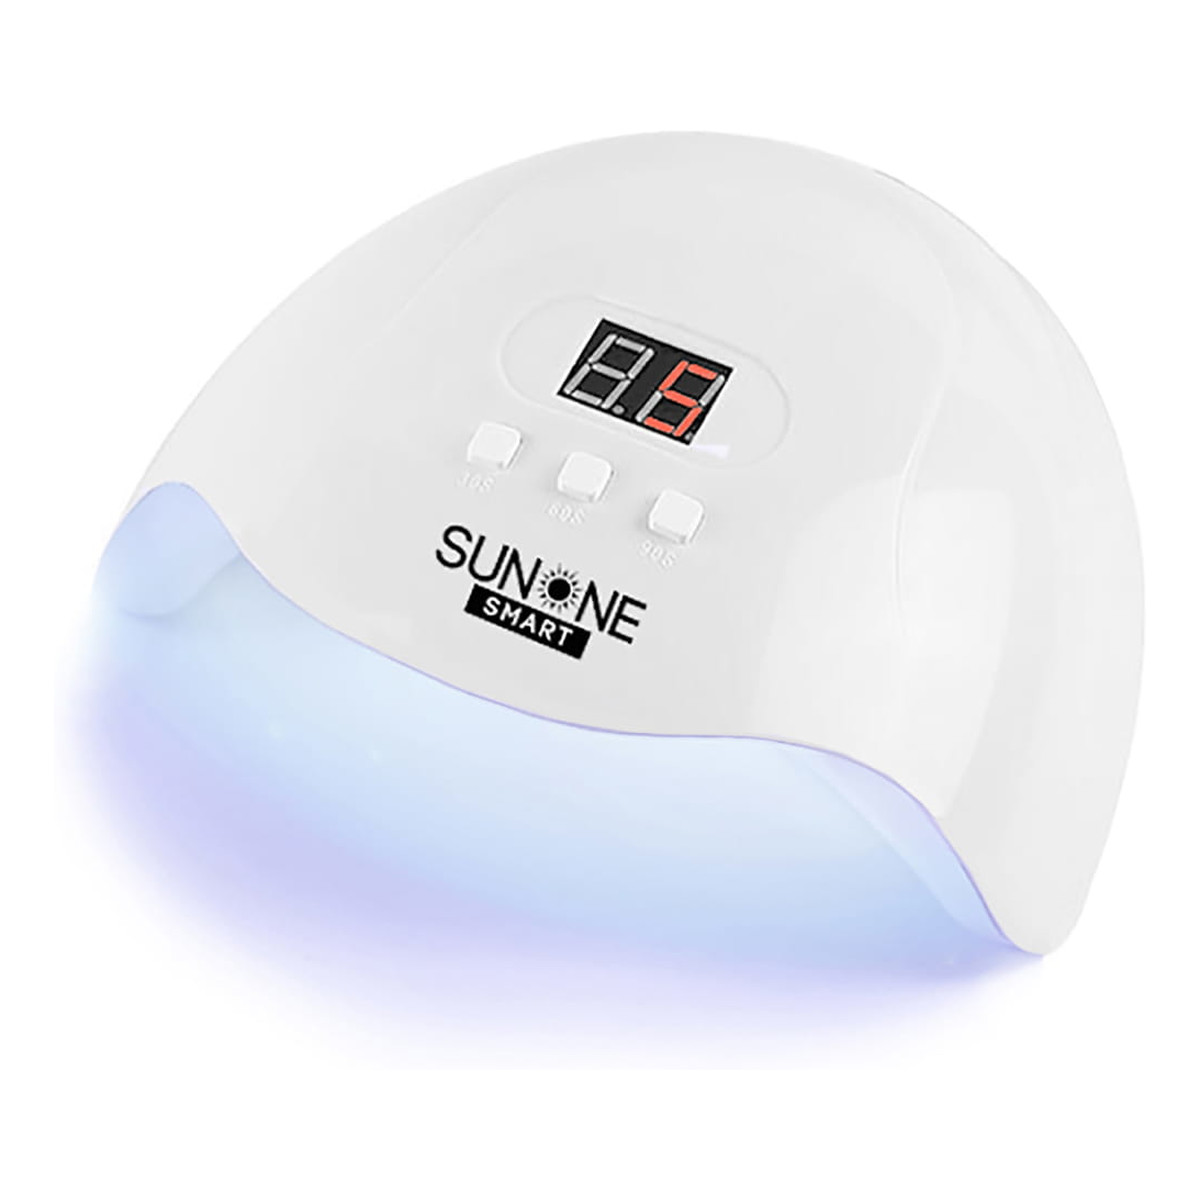 Sunone Smart lampa uv/led 48w biała